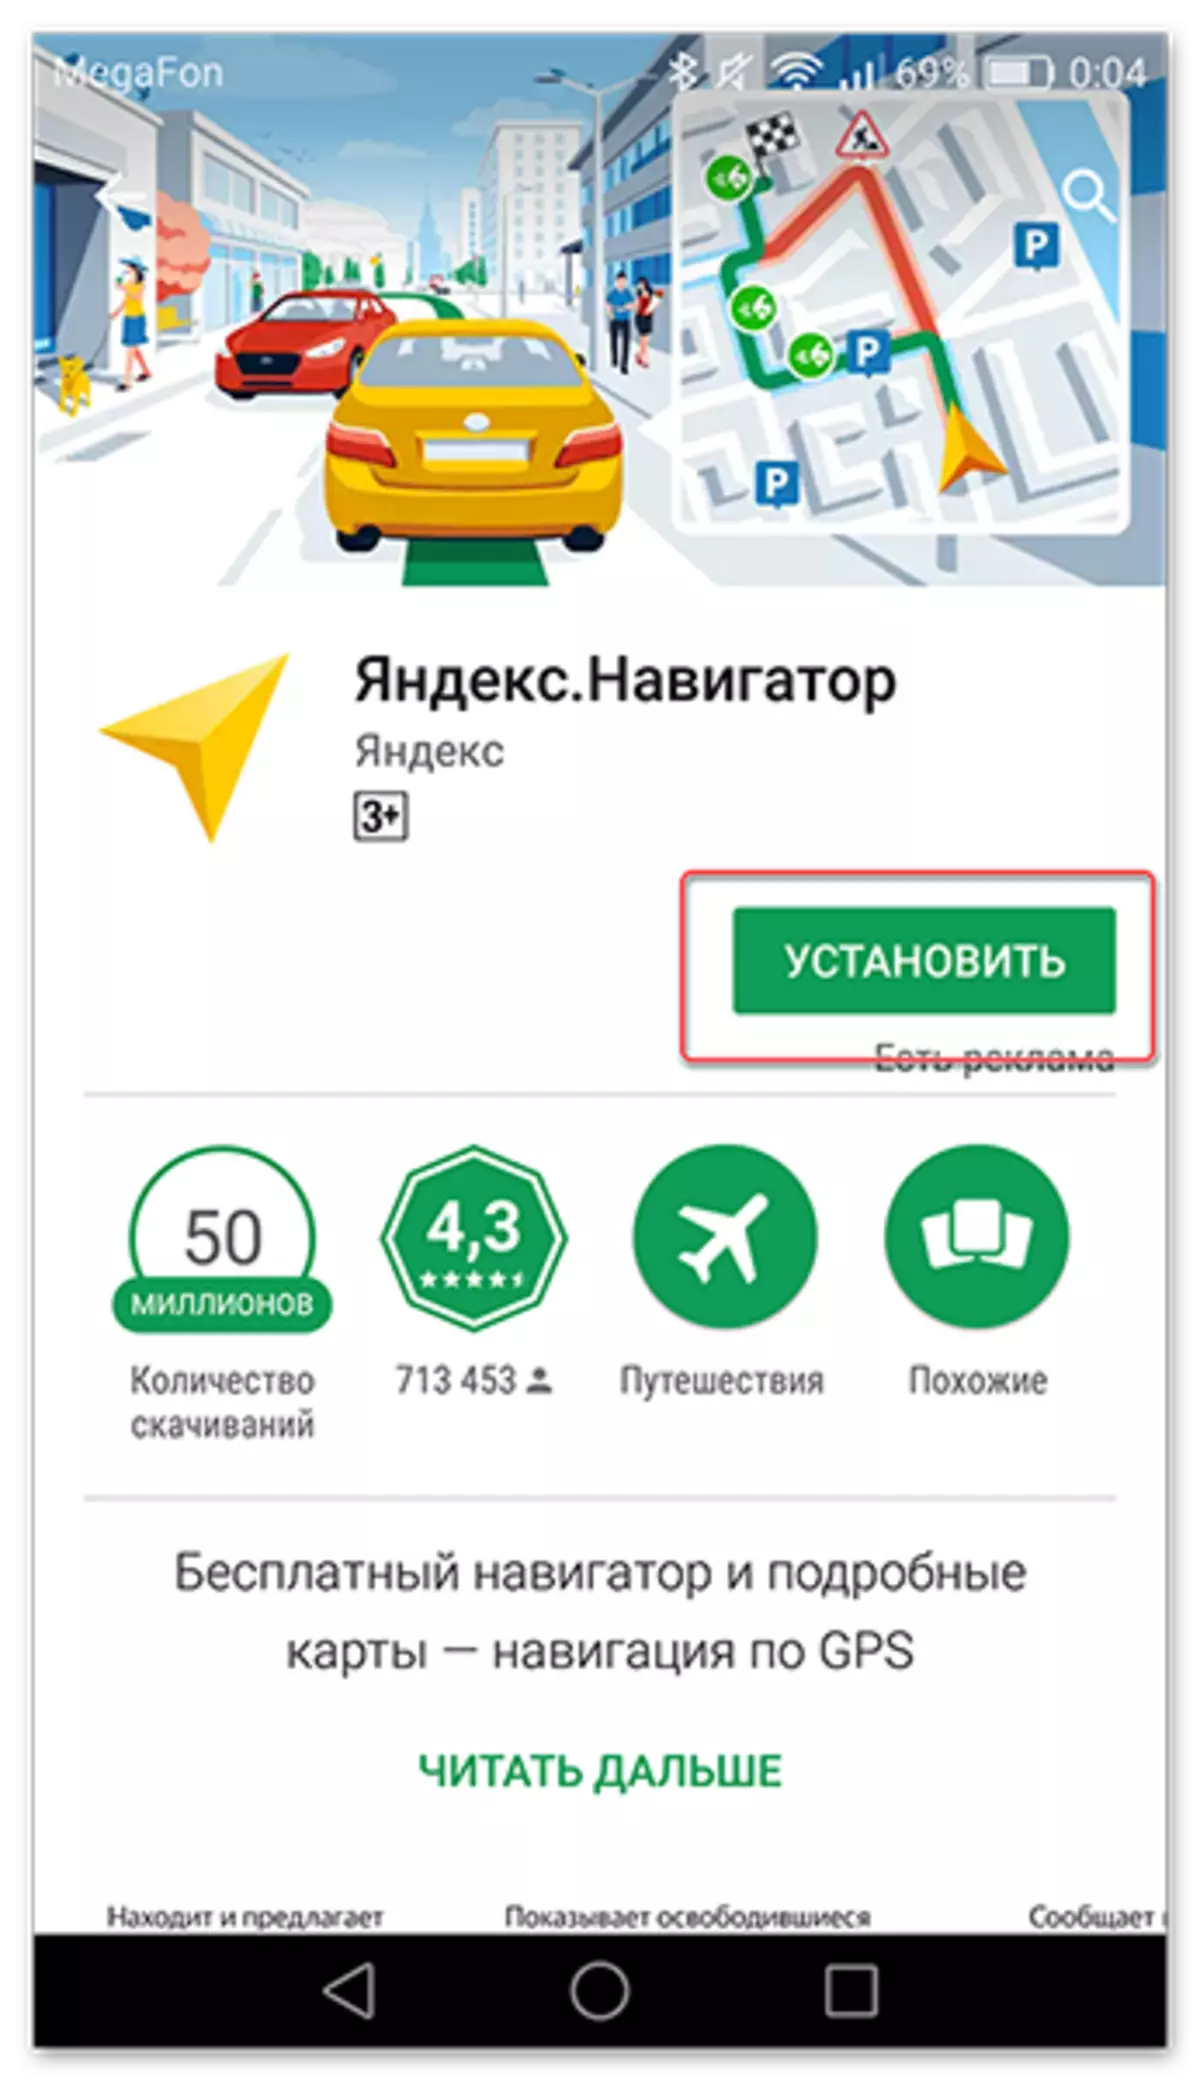 Yandex نى چۈشۈرۈش ئۈچۈن «SPANDE نى چۈشۈرۈش» نى چېكىڭ. يېتەكچى